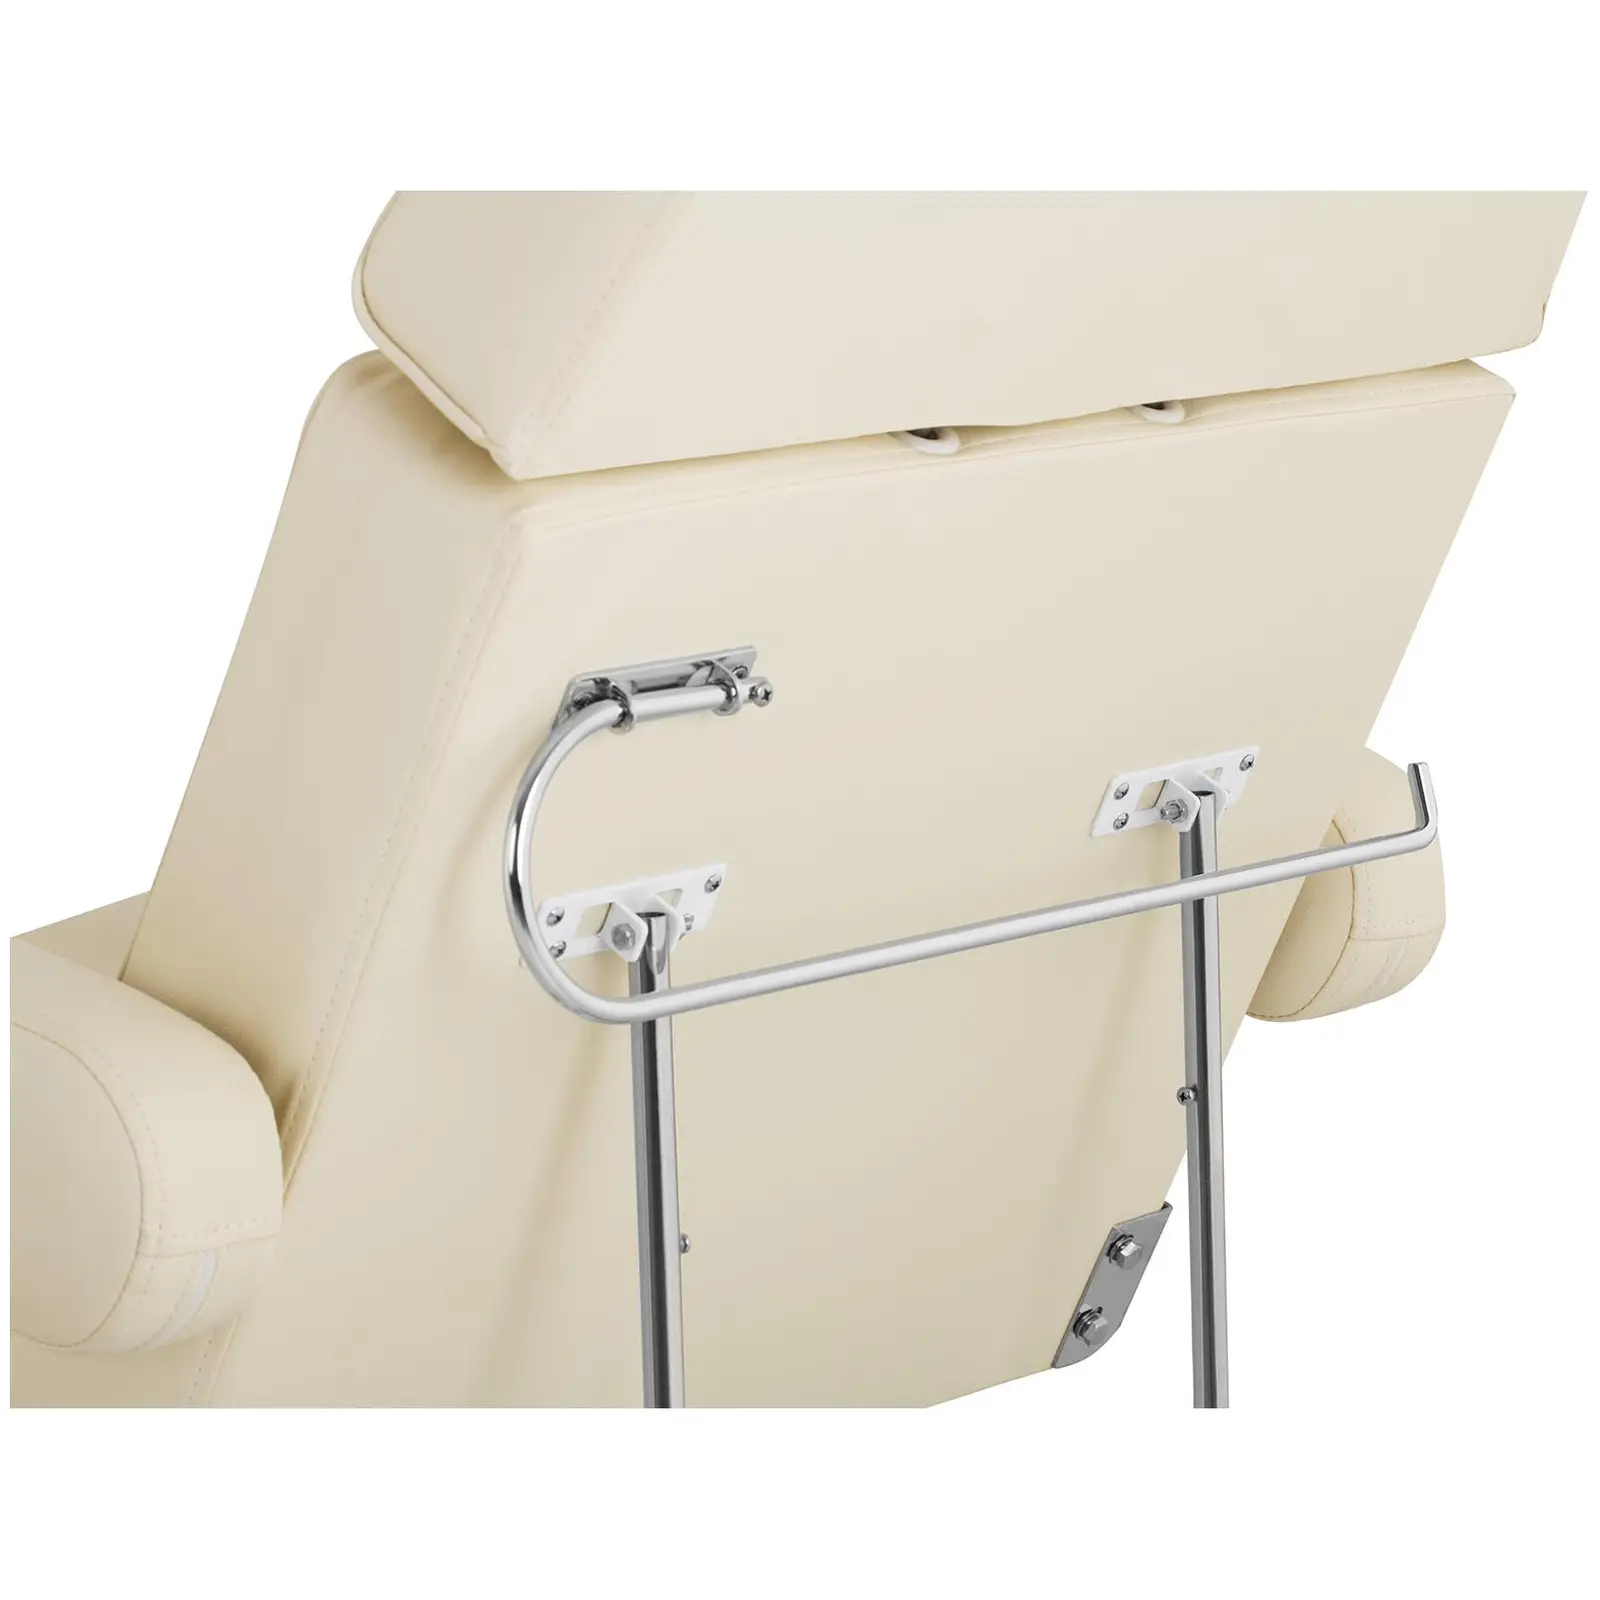 Scaun hidraulic pentru pedichiură - 197 x 61.5 x 61 cm - 200 kg - Beige